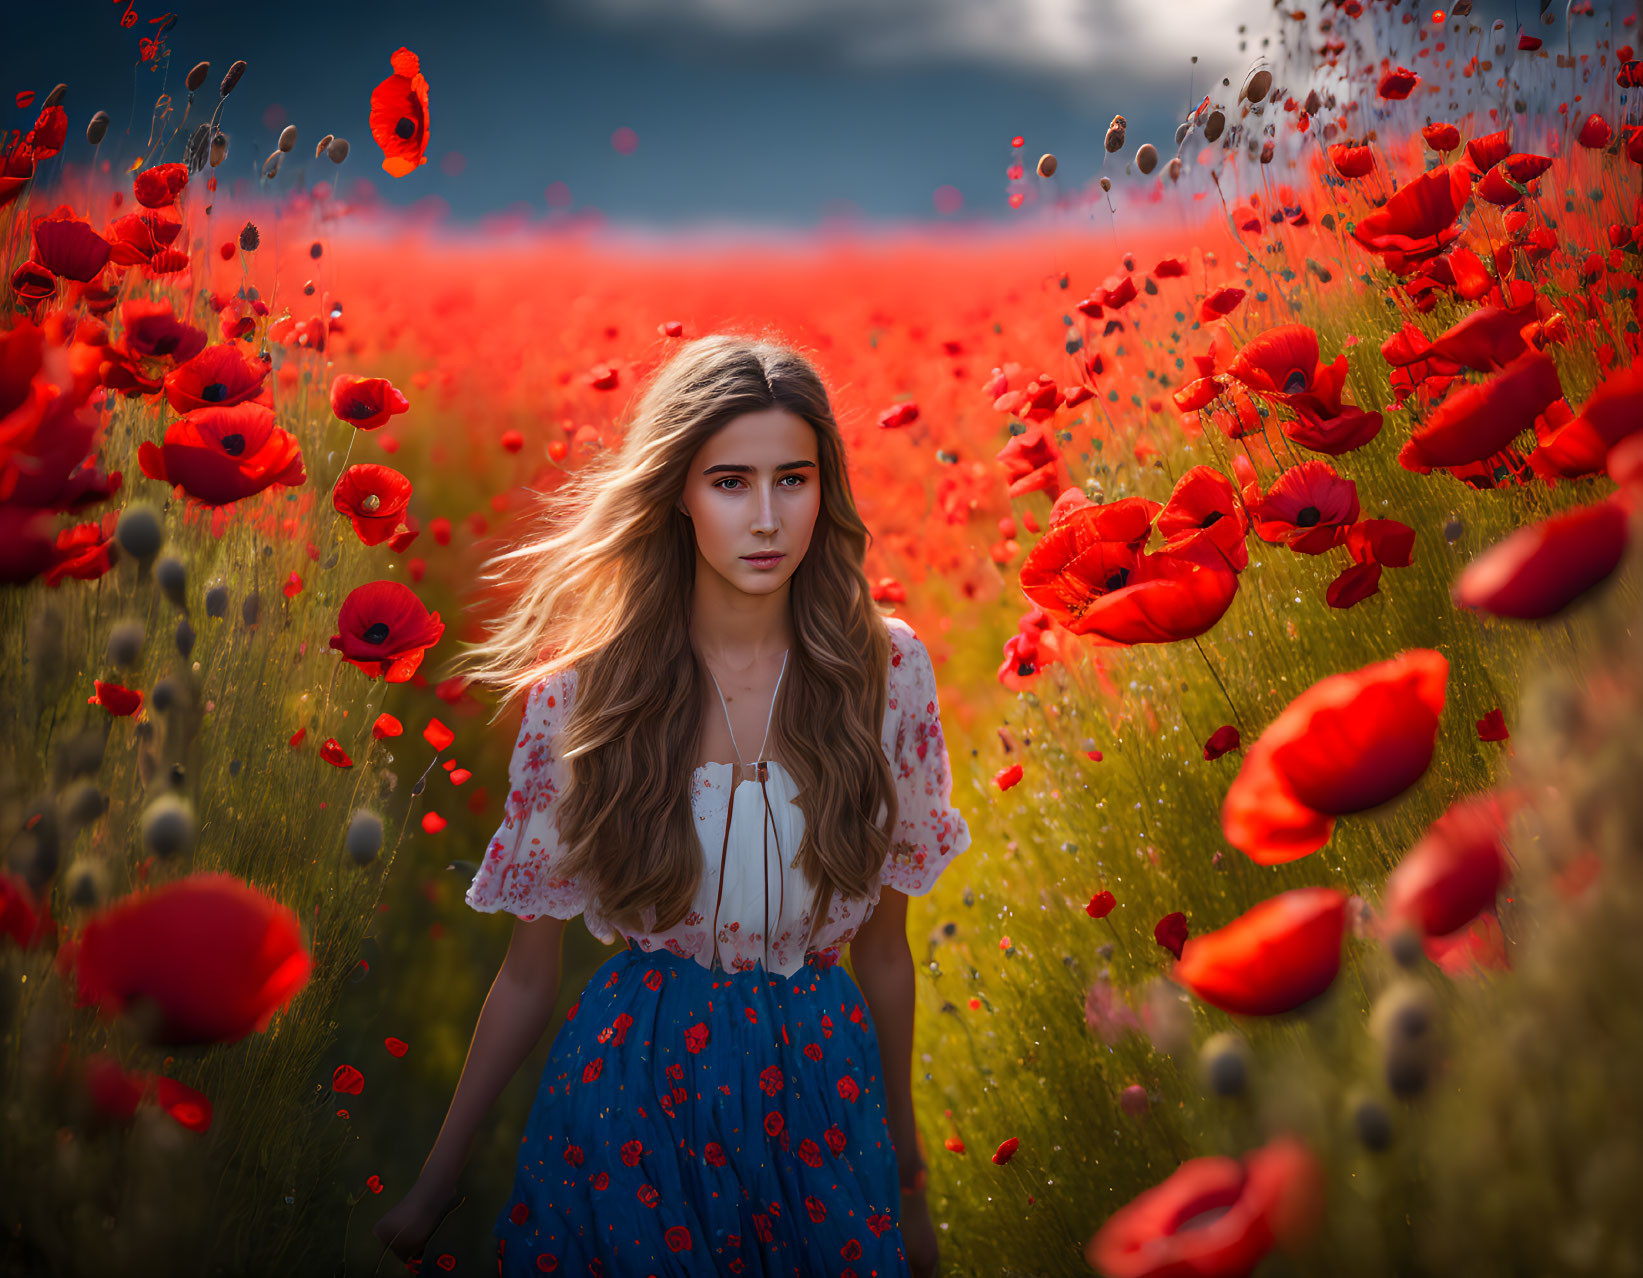 The girl in the poppy field